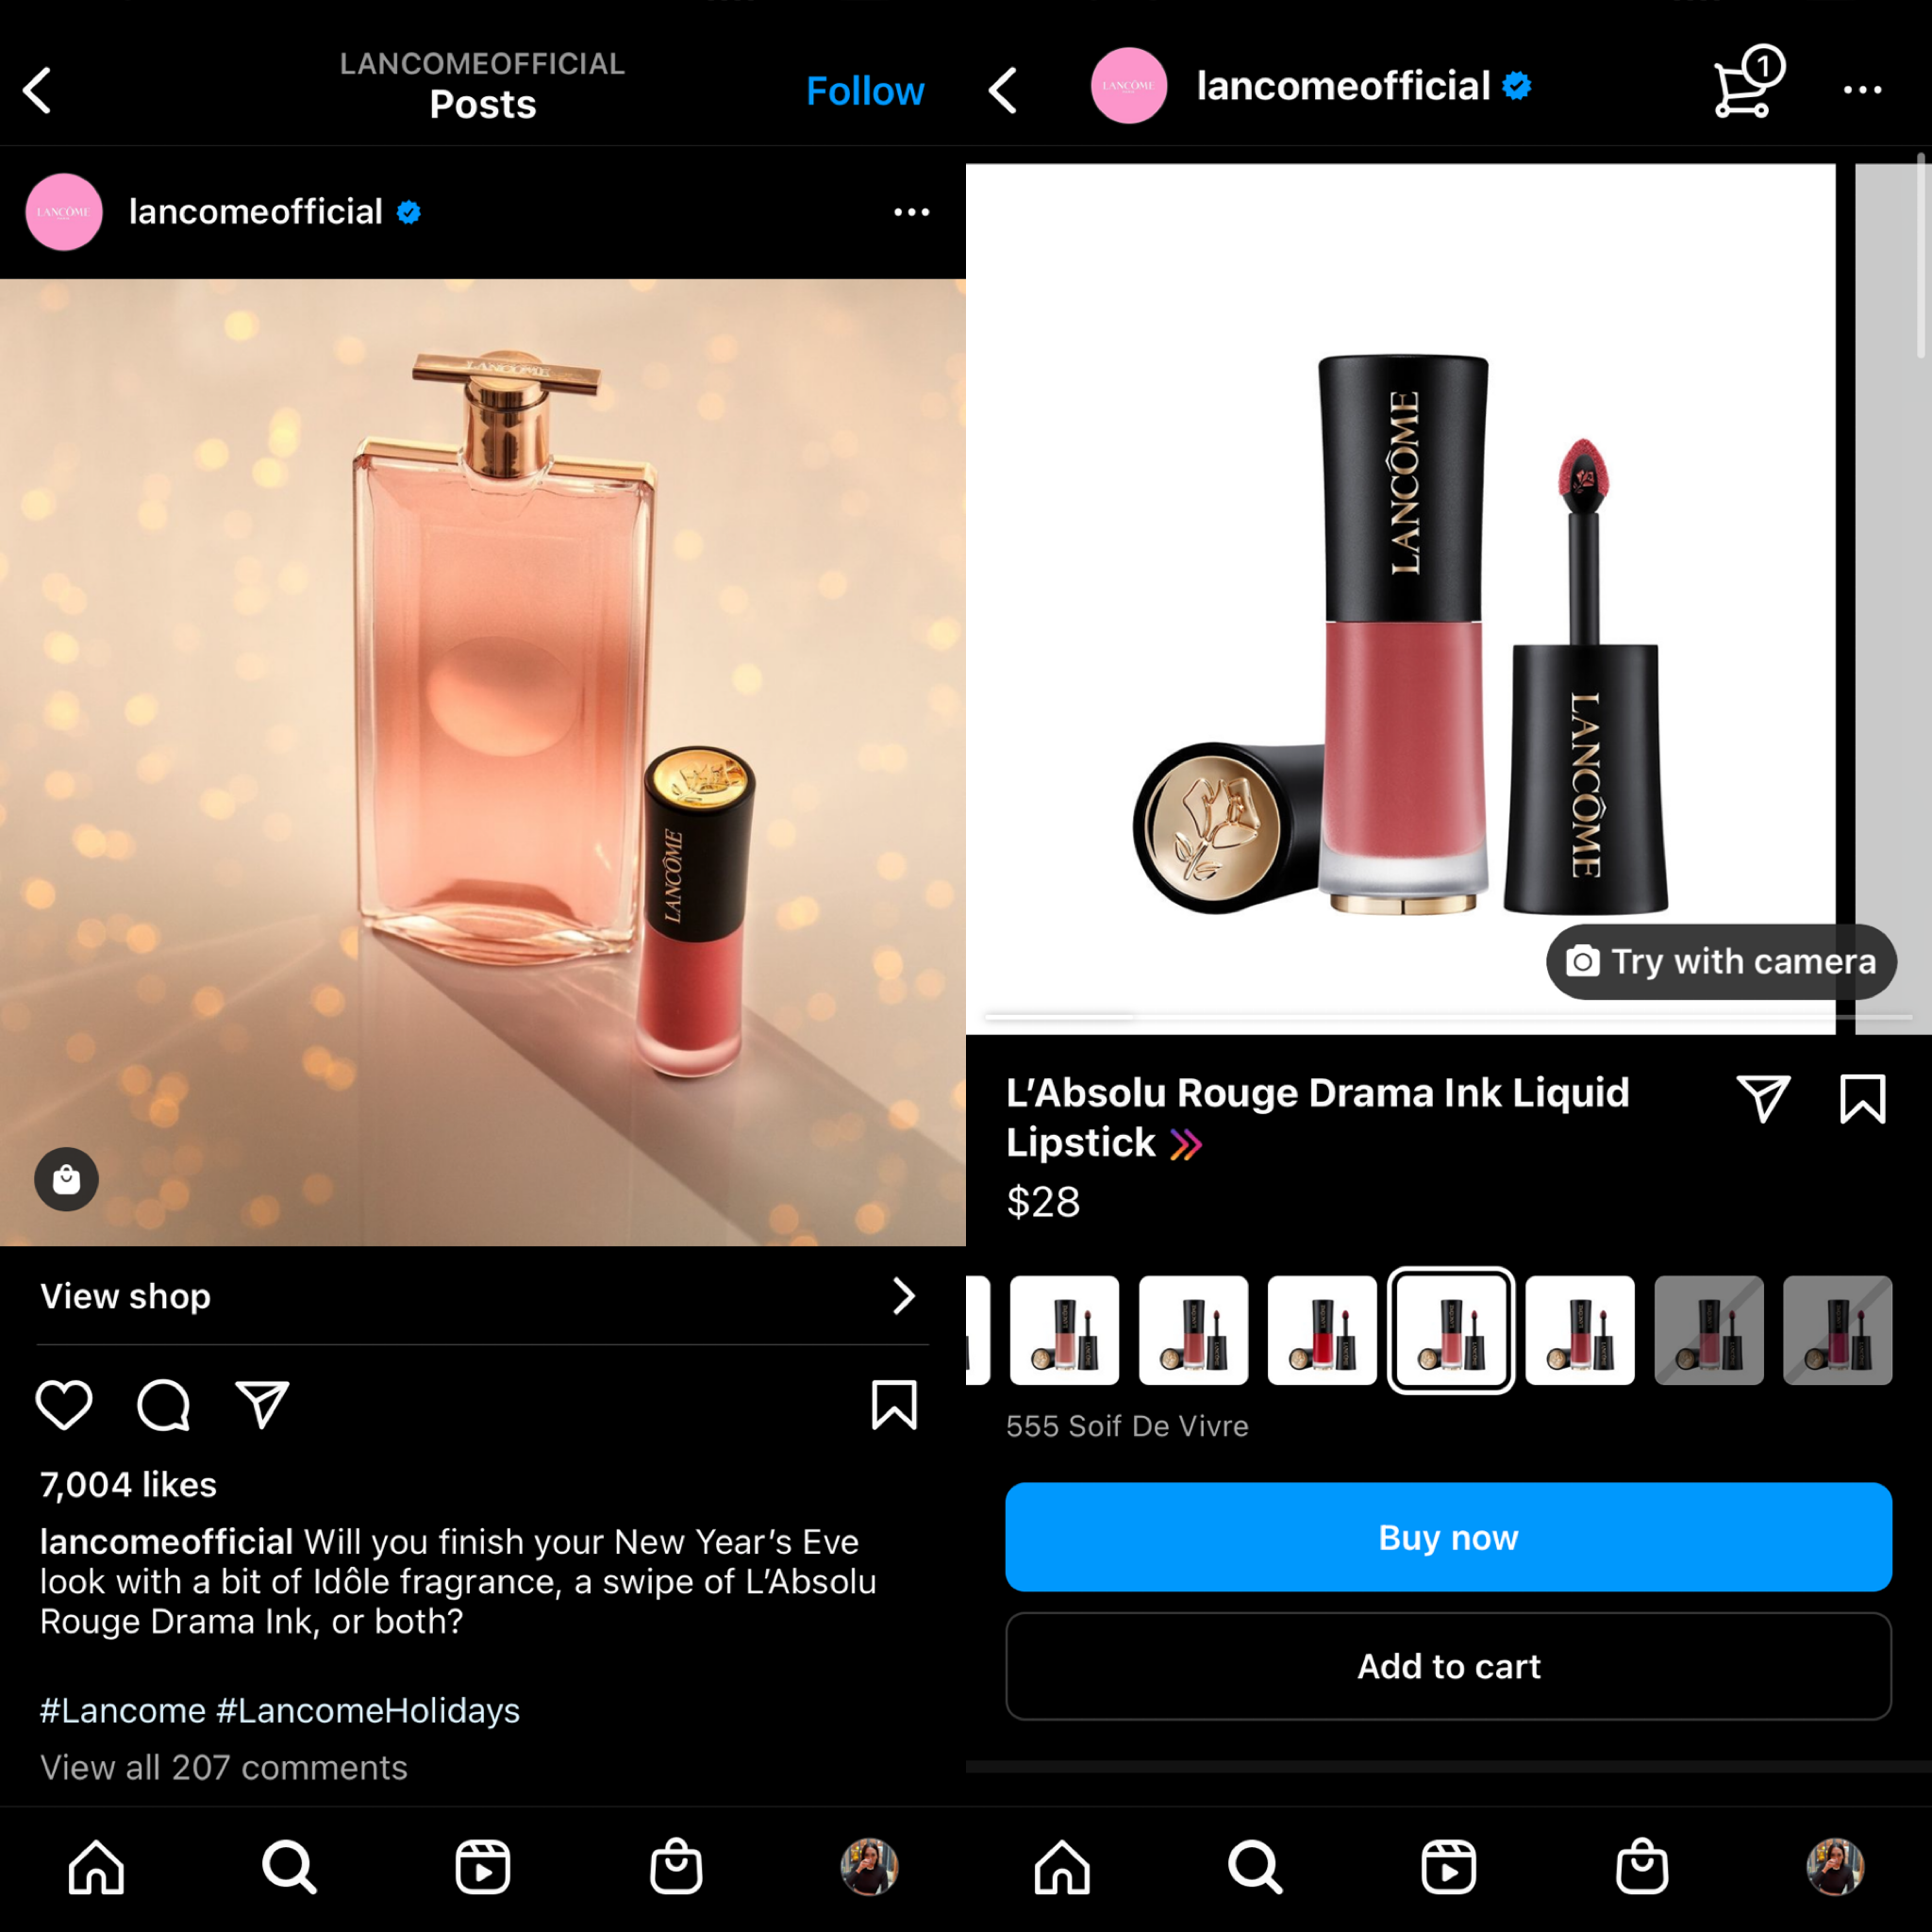 Screenshots of Instagram Shopping (Instagram)